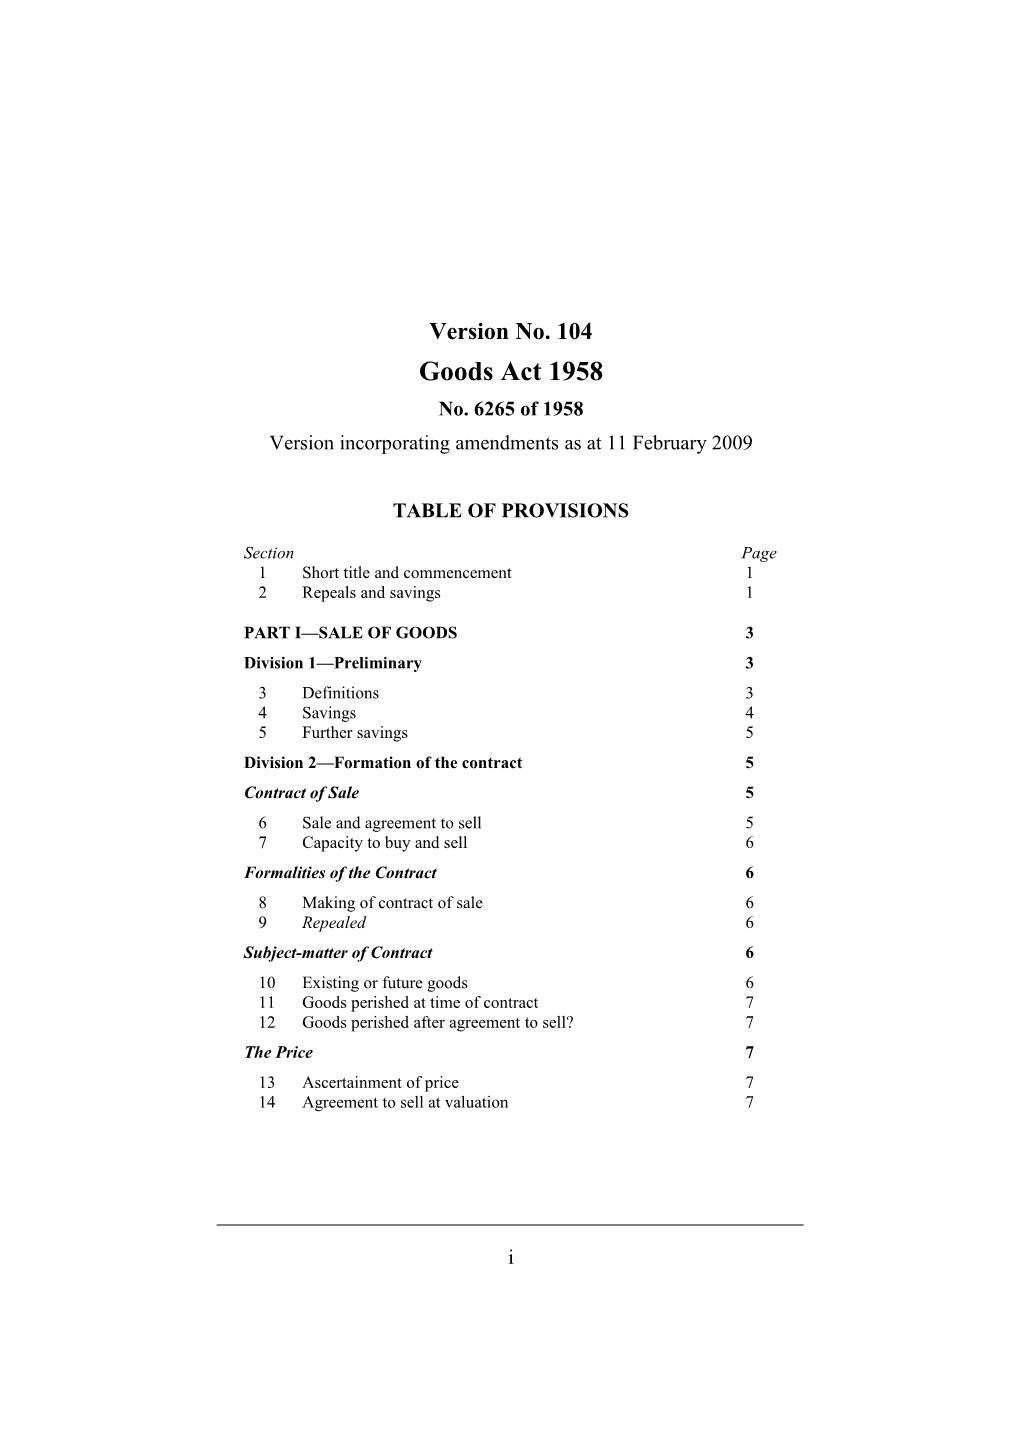 Version Incorporating Amendments As at 11 February 2009